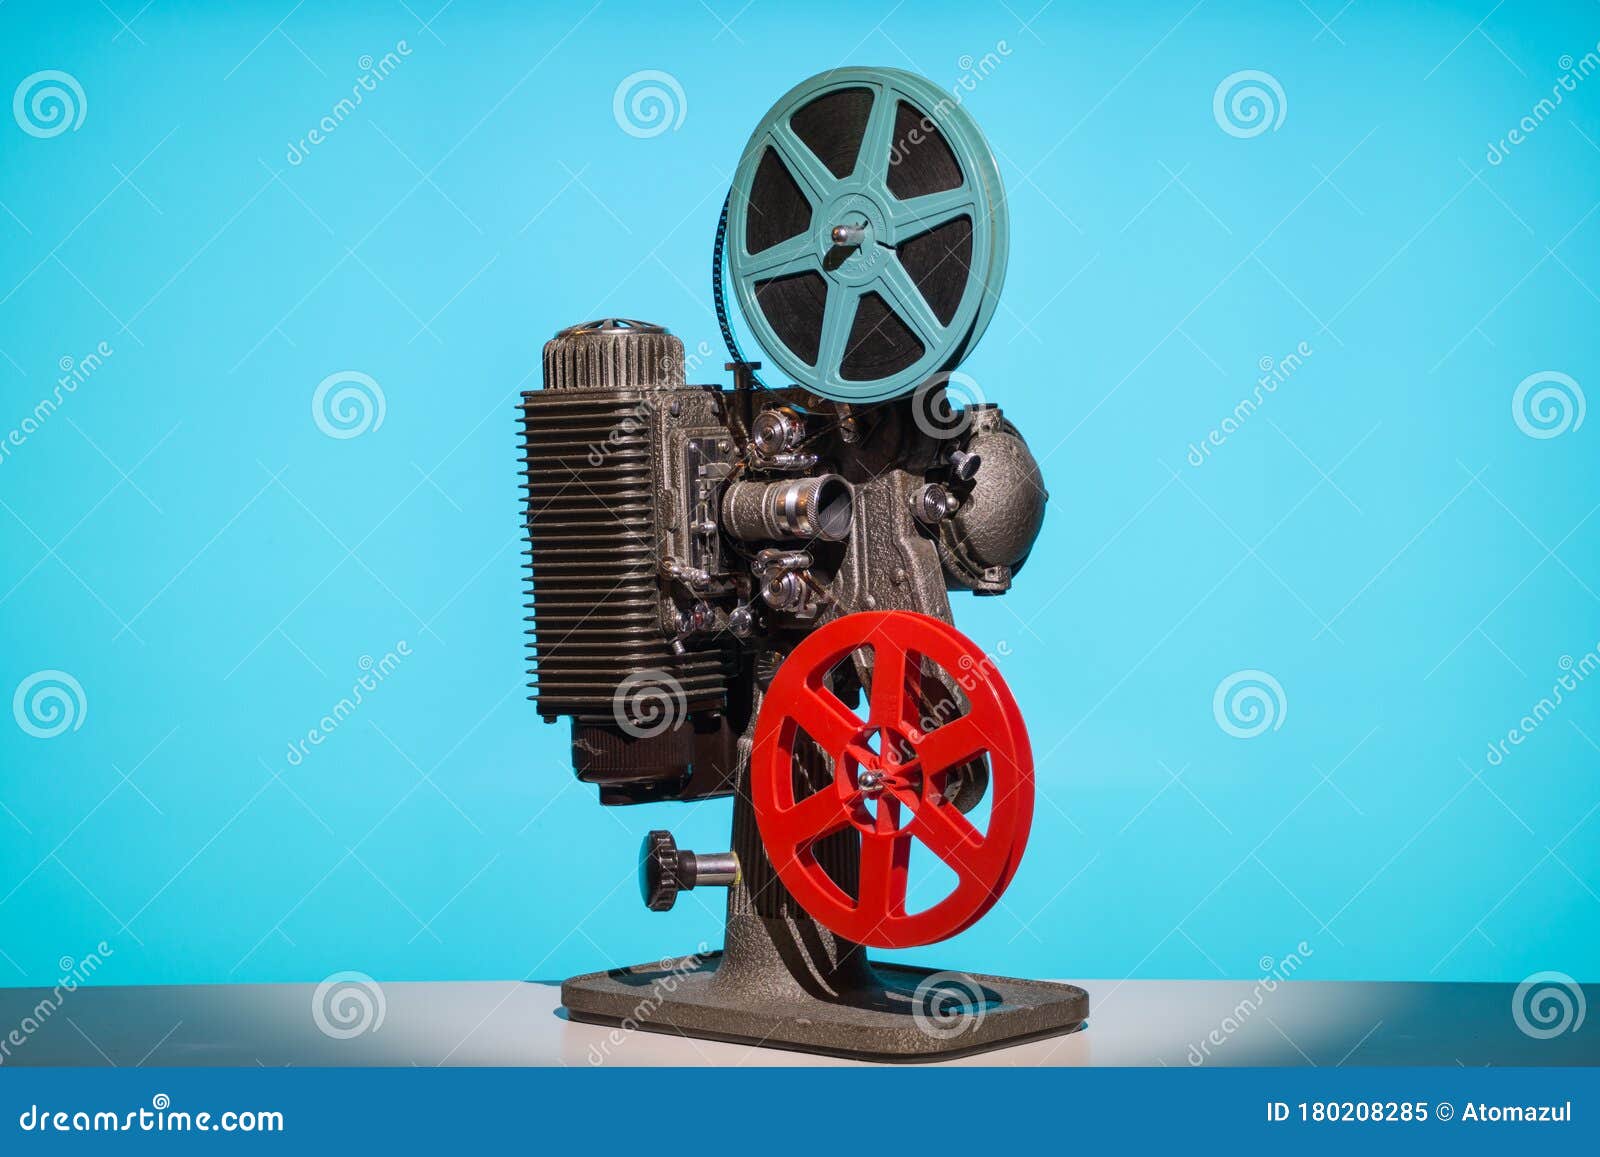 Antique Vintage 8mm Film Projector Blue Teal Background Stock Image - Image  of cinematography, 1940s: 180208285